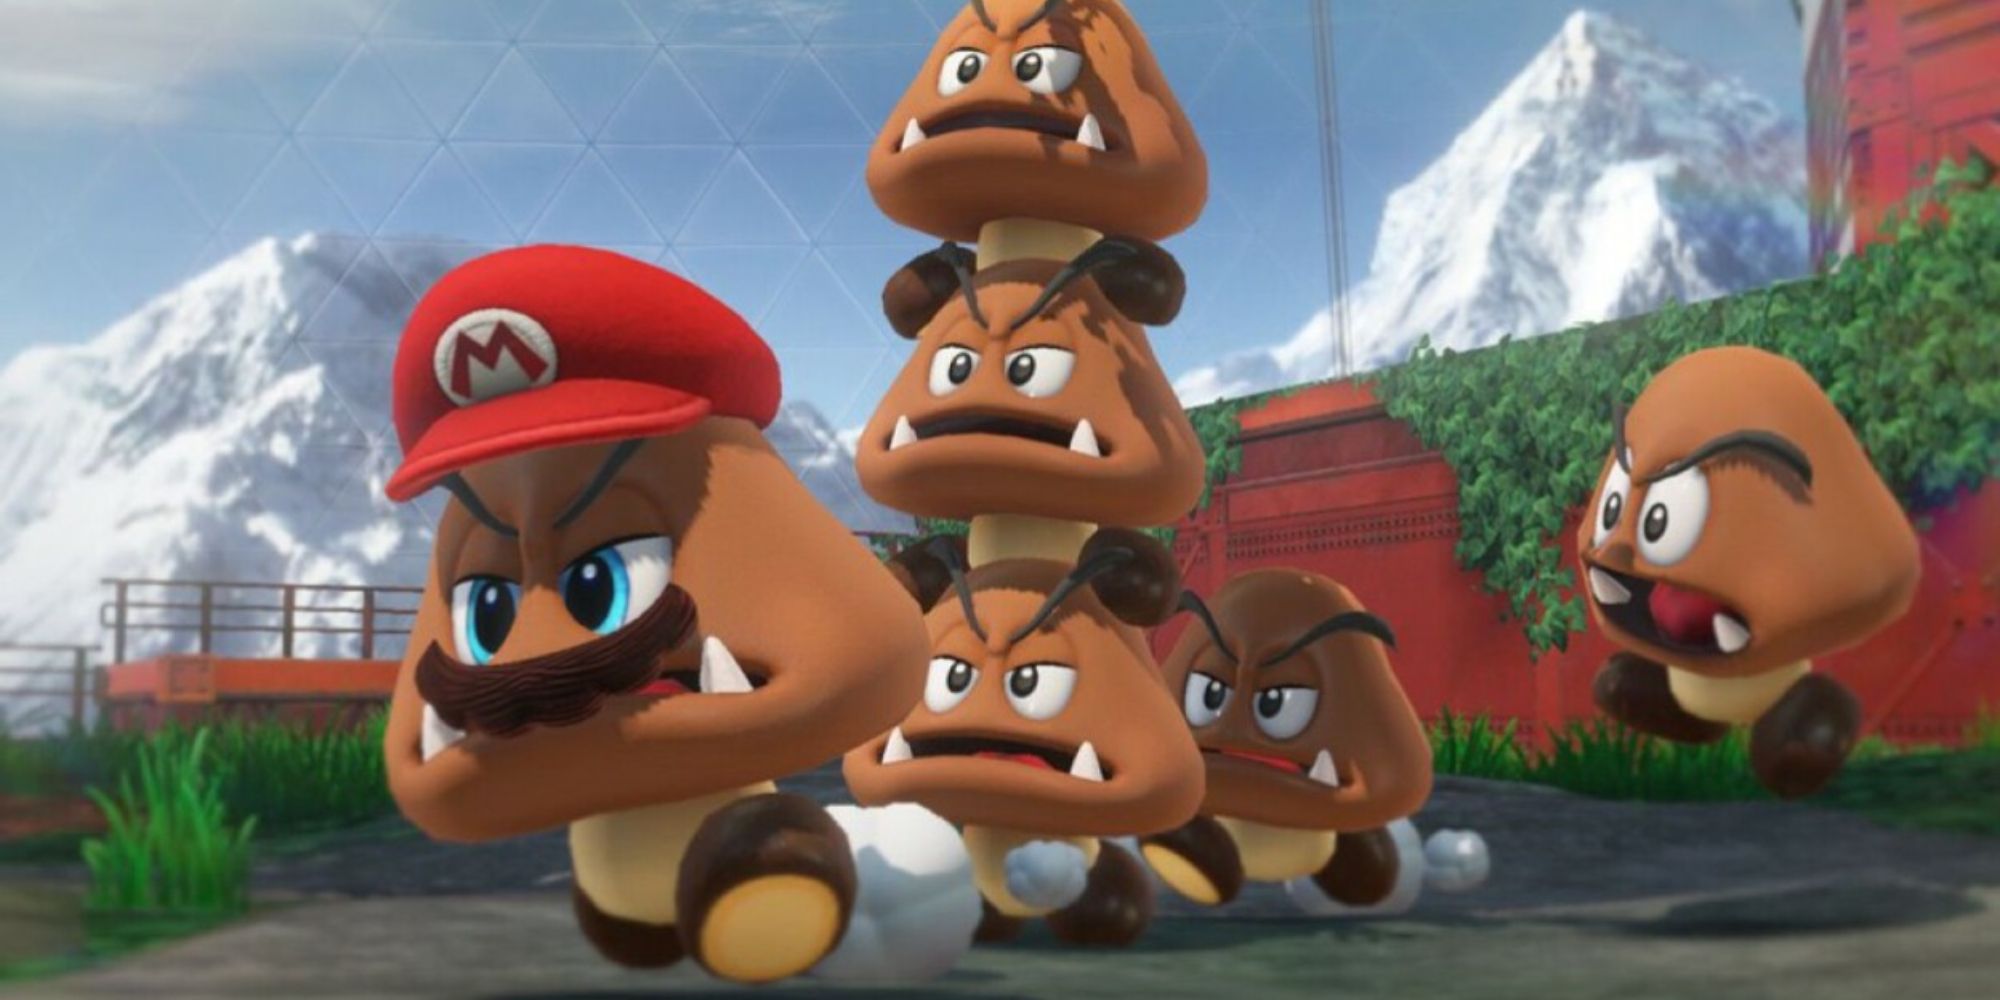 A tower of Goombas pursue a Goomba Mario in Super Mario Odyssey